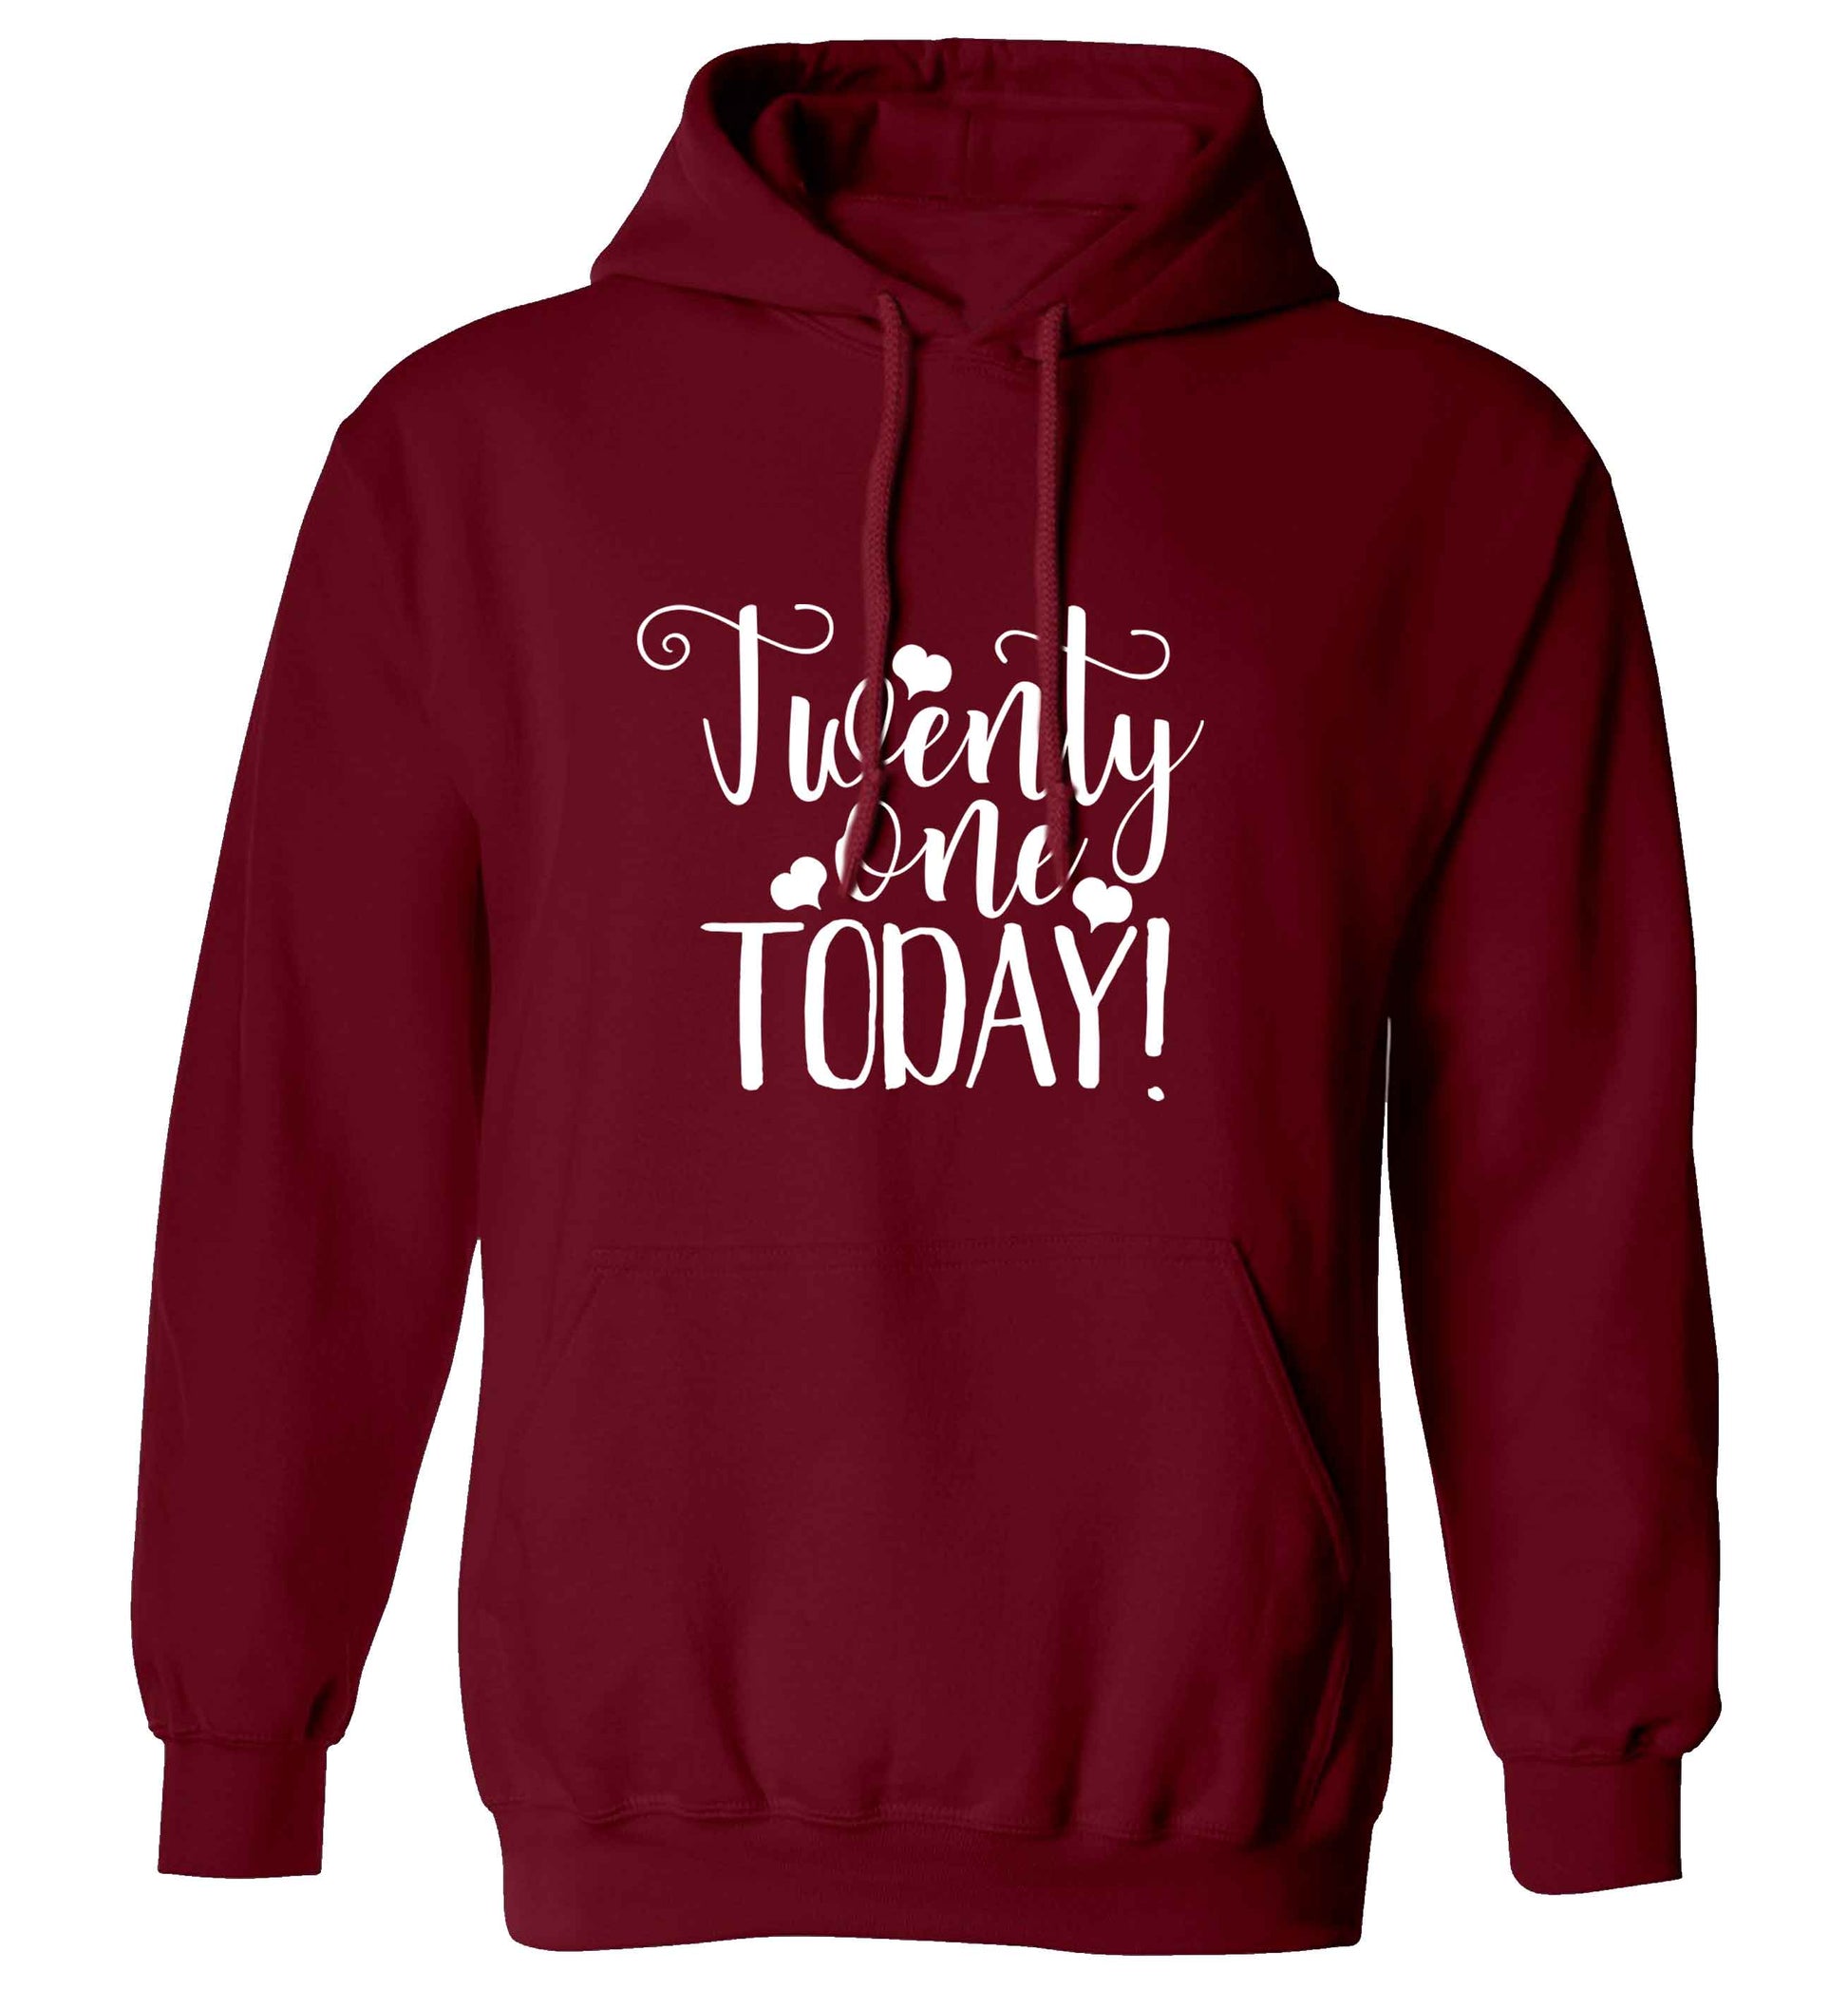 Twenty one today!adults unisex maroon hoodie 2XL